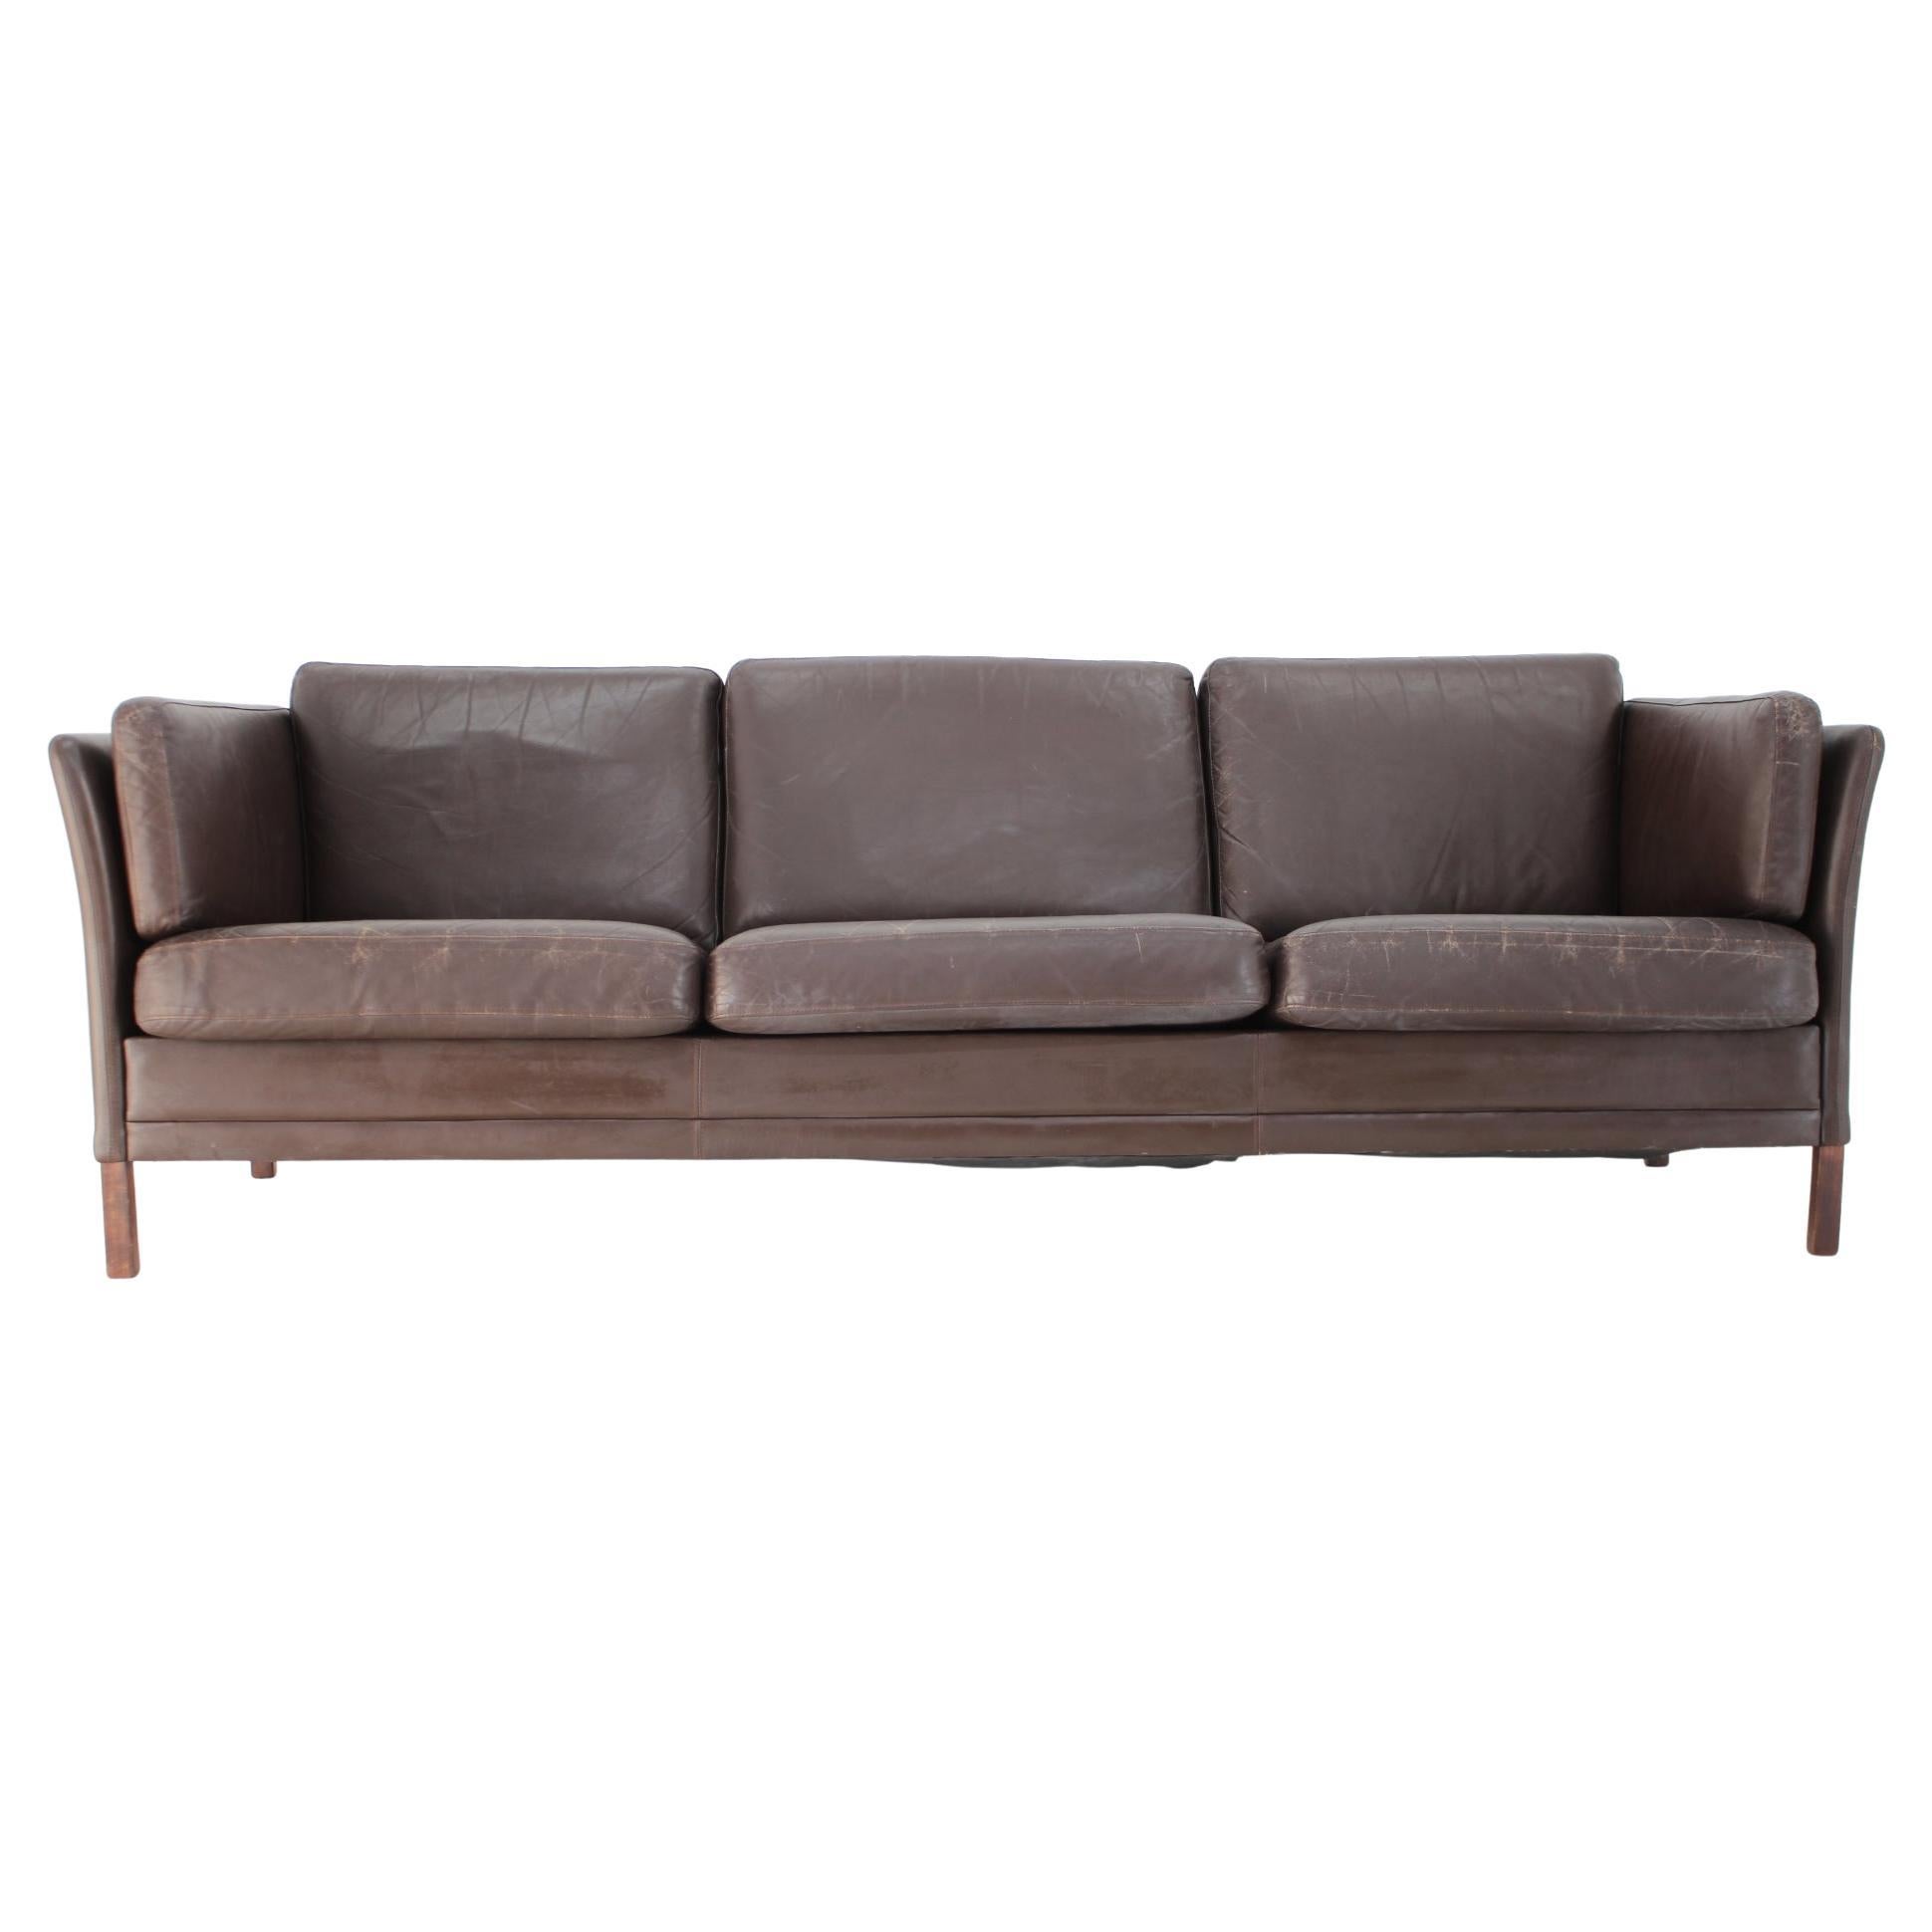 1970s Danish Brown Leather 3-Seater Sofa